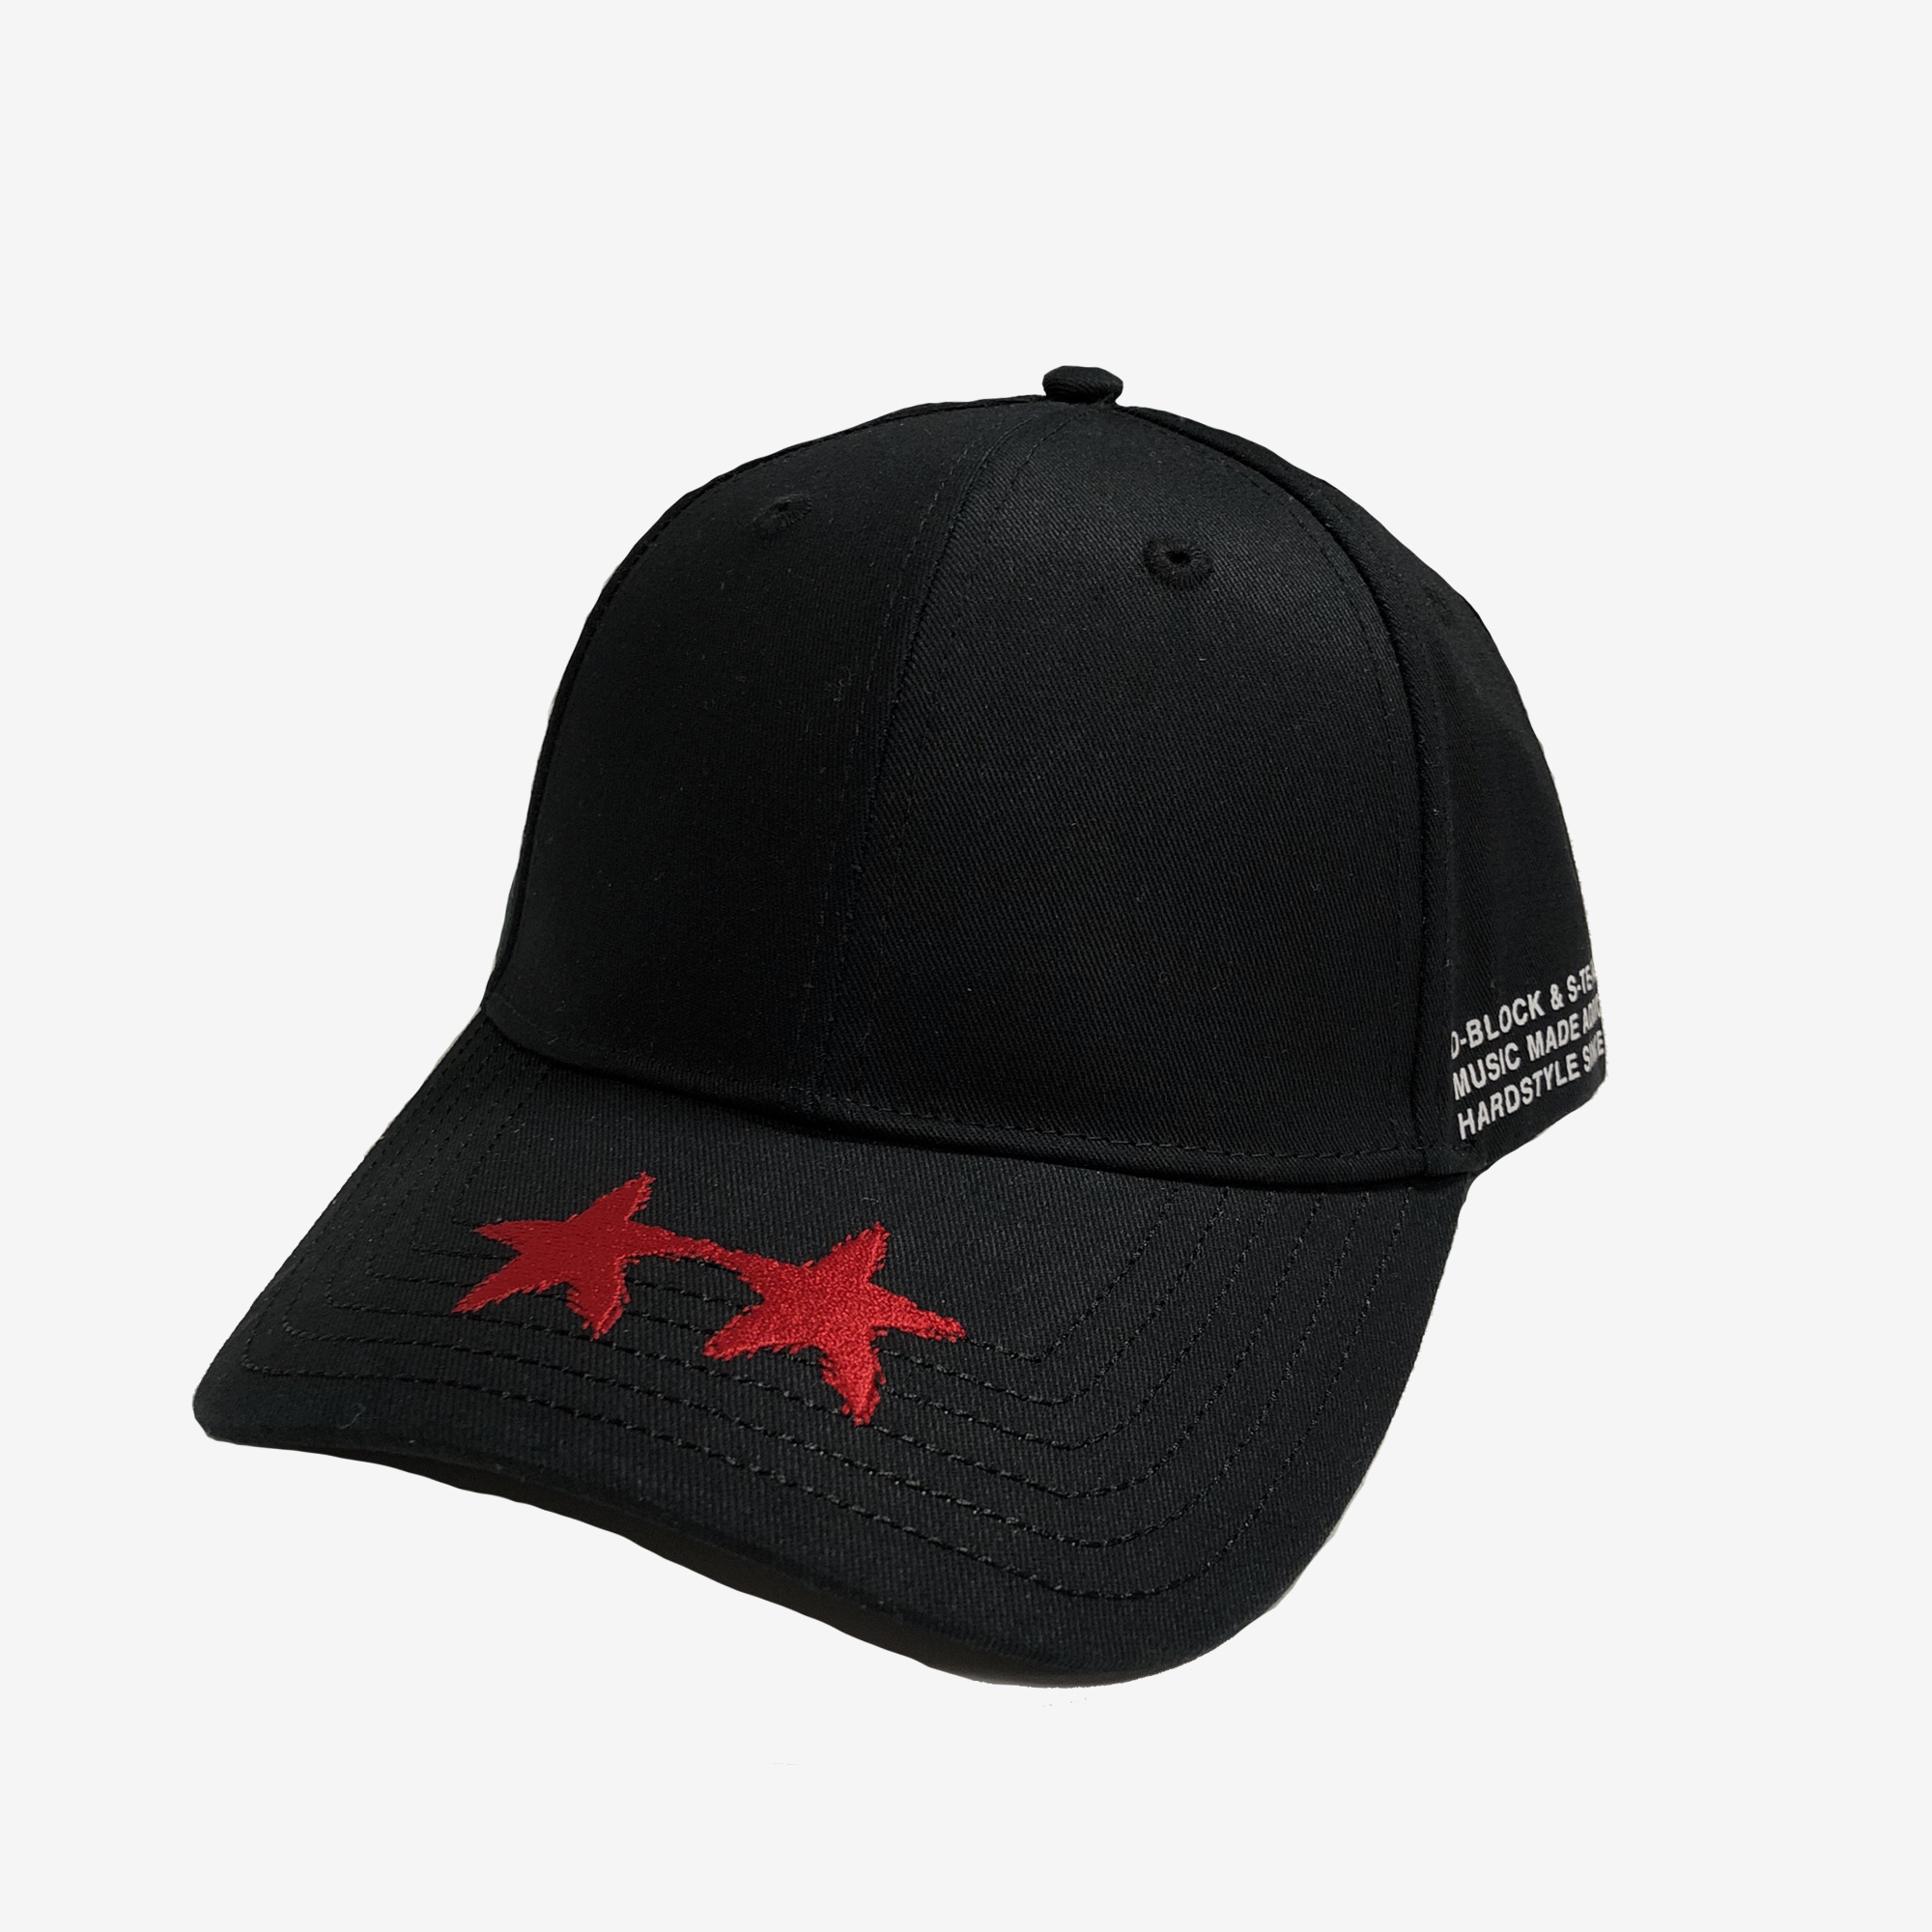 D-BLOCK & S-TE-FAN STAR CAP